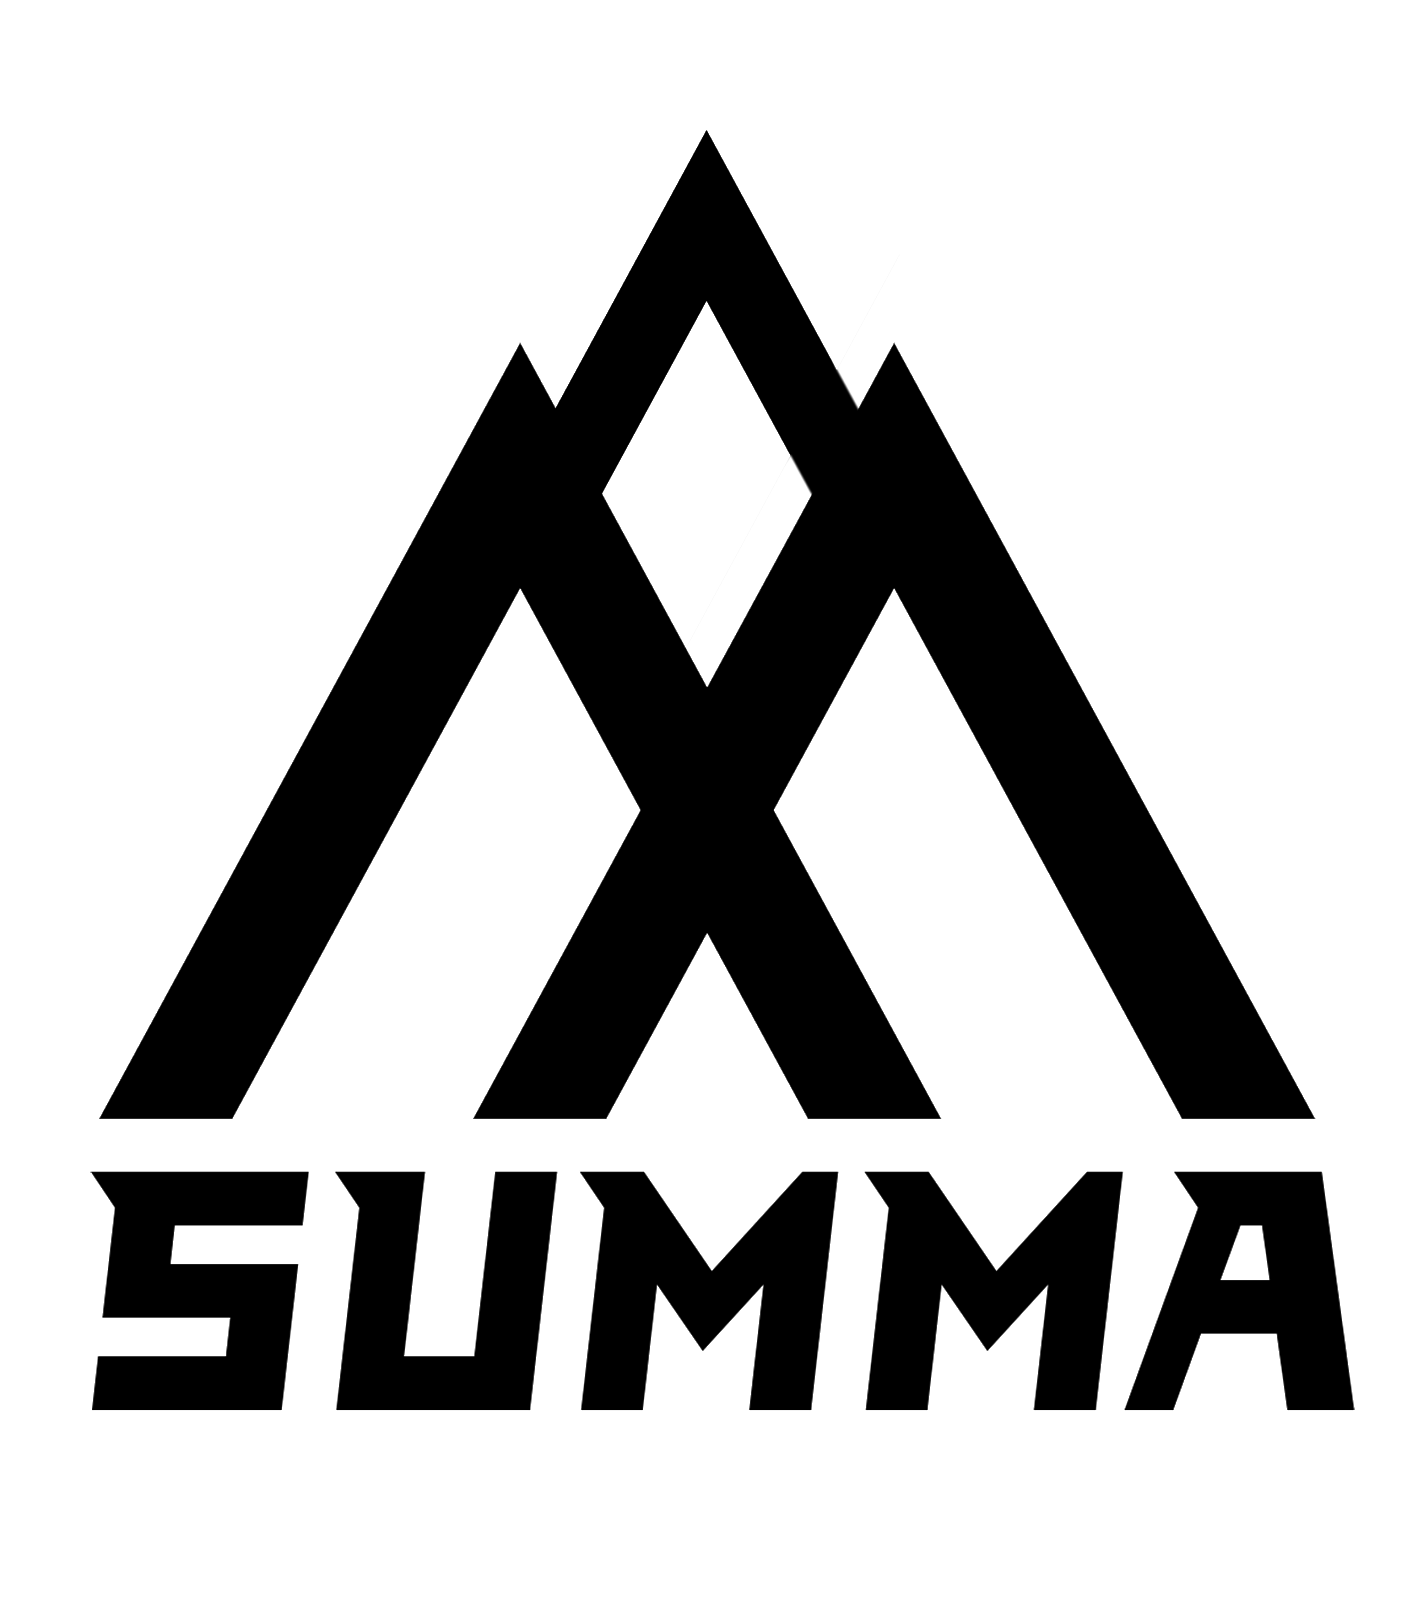 Summa Logo